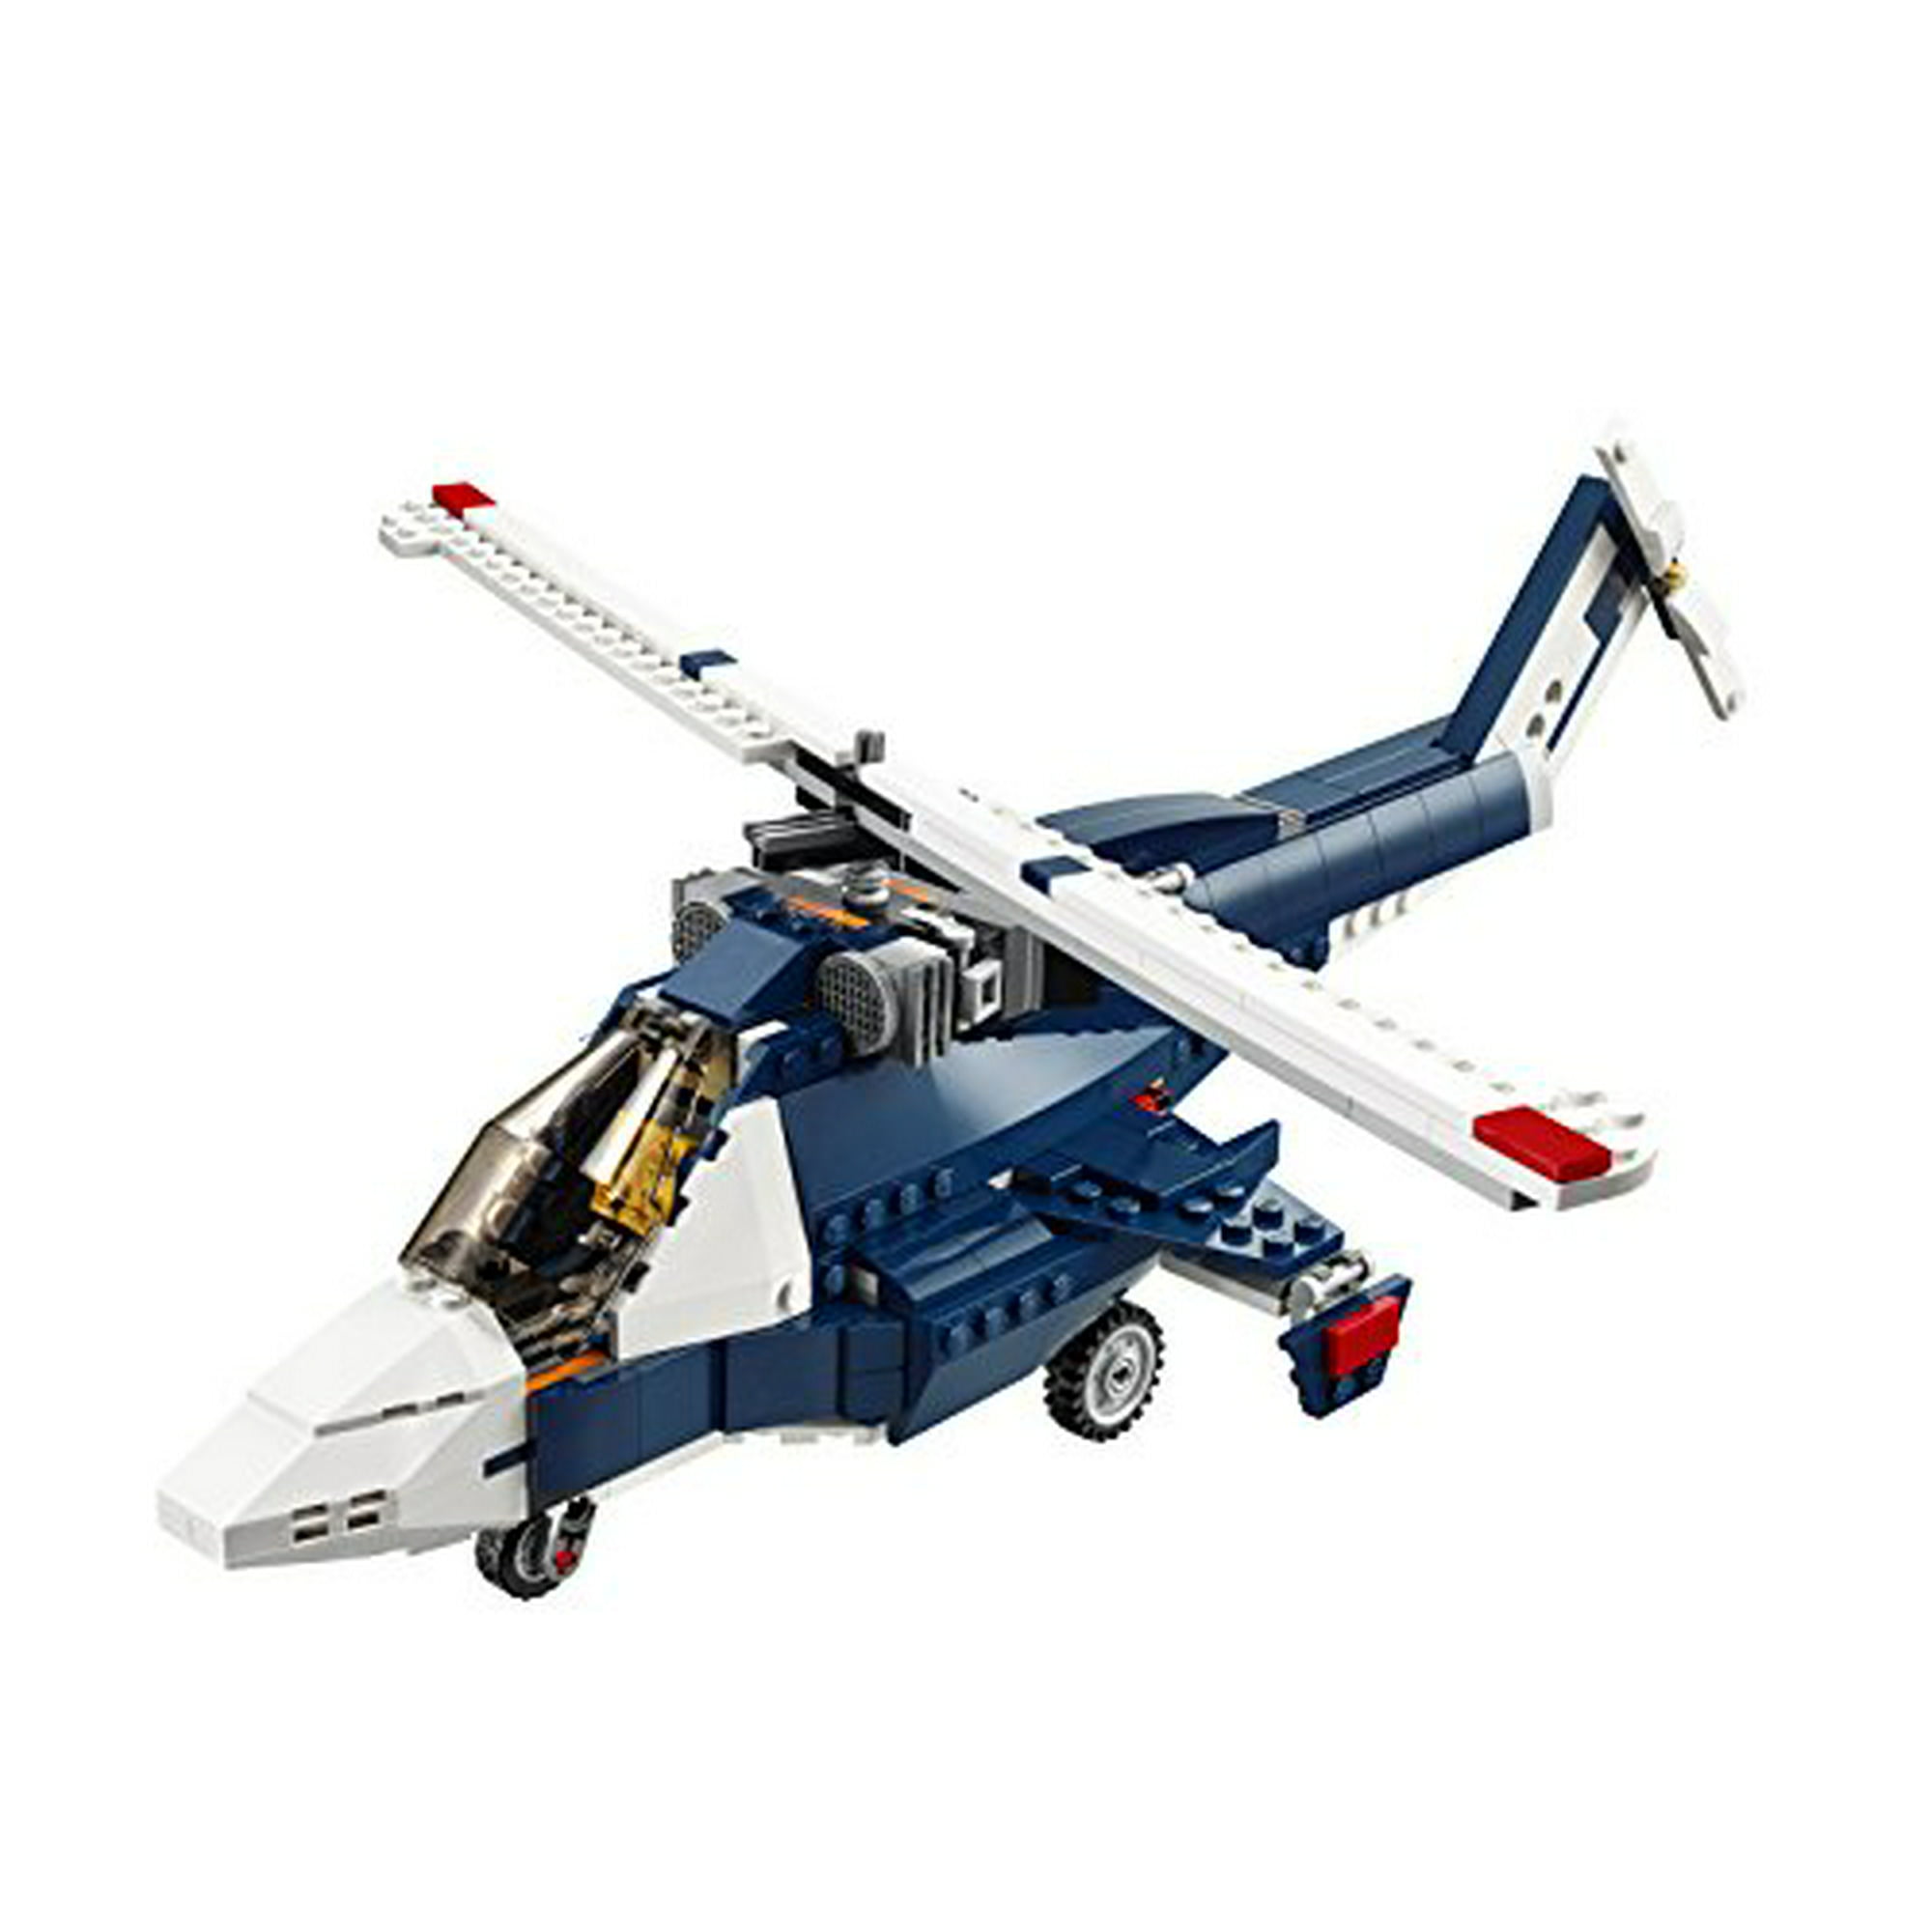 Lego Creator 31039 Blue Power Jet Building Kit | Walmart Canada